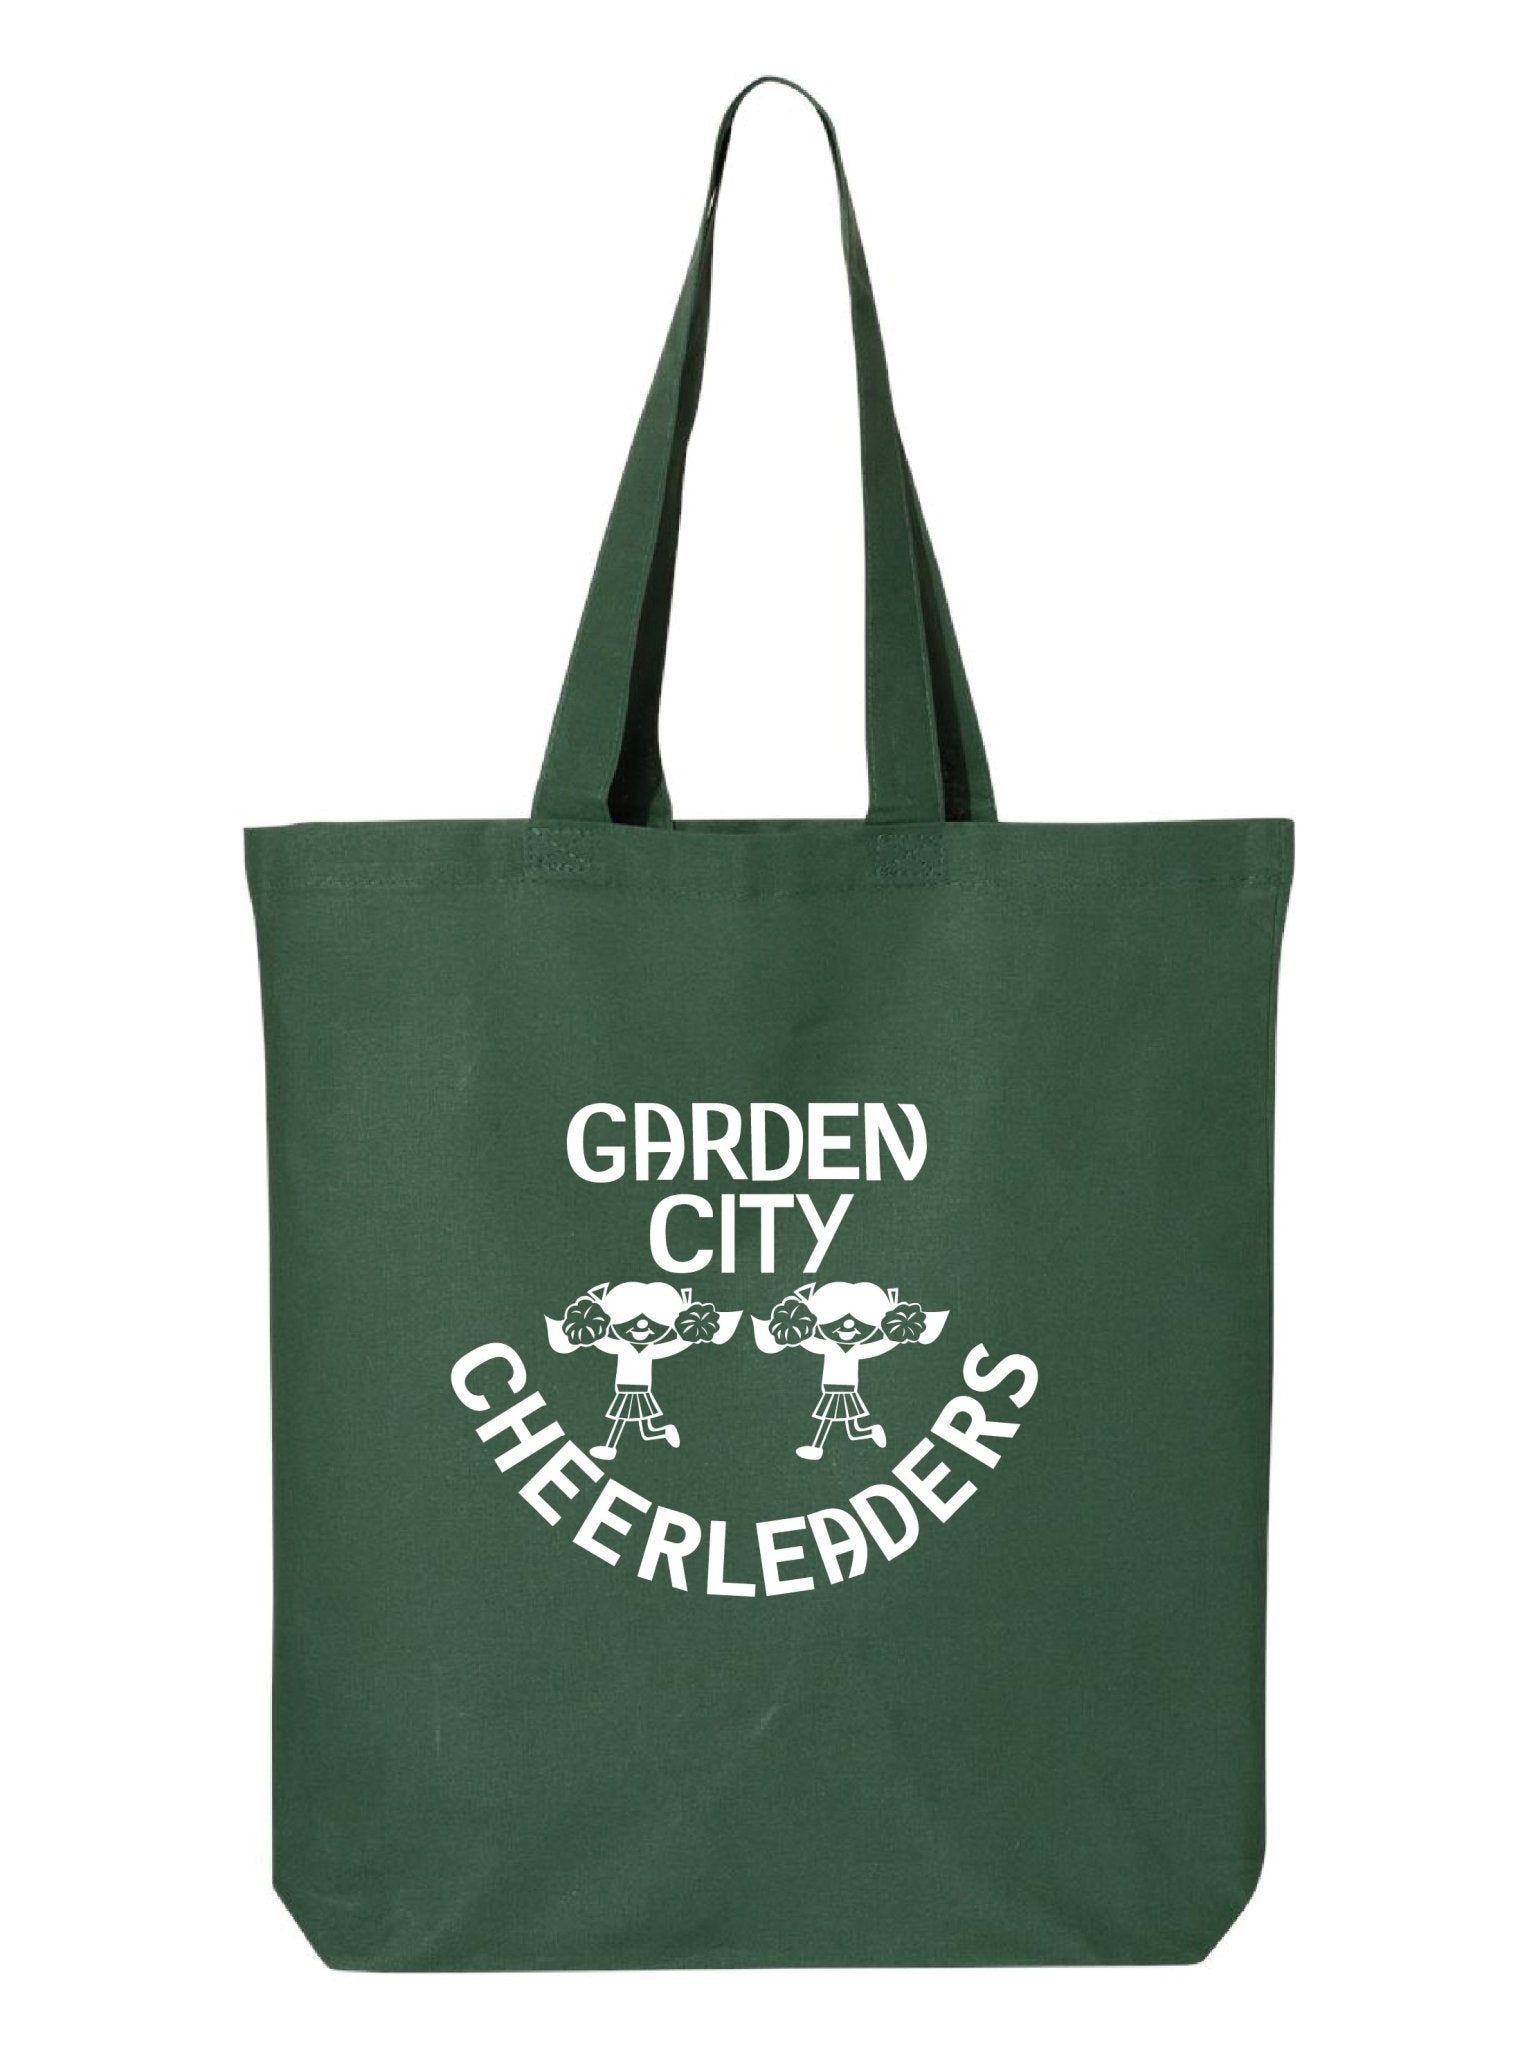 Garden City Cheerleaders Tote Bag - Oddball Workshop